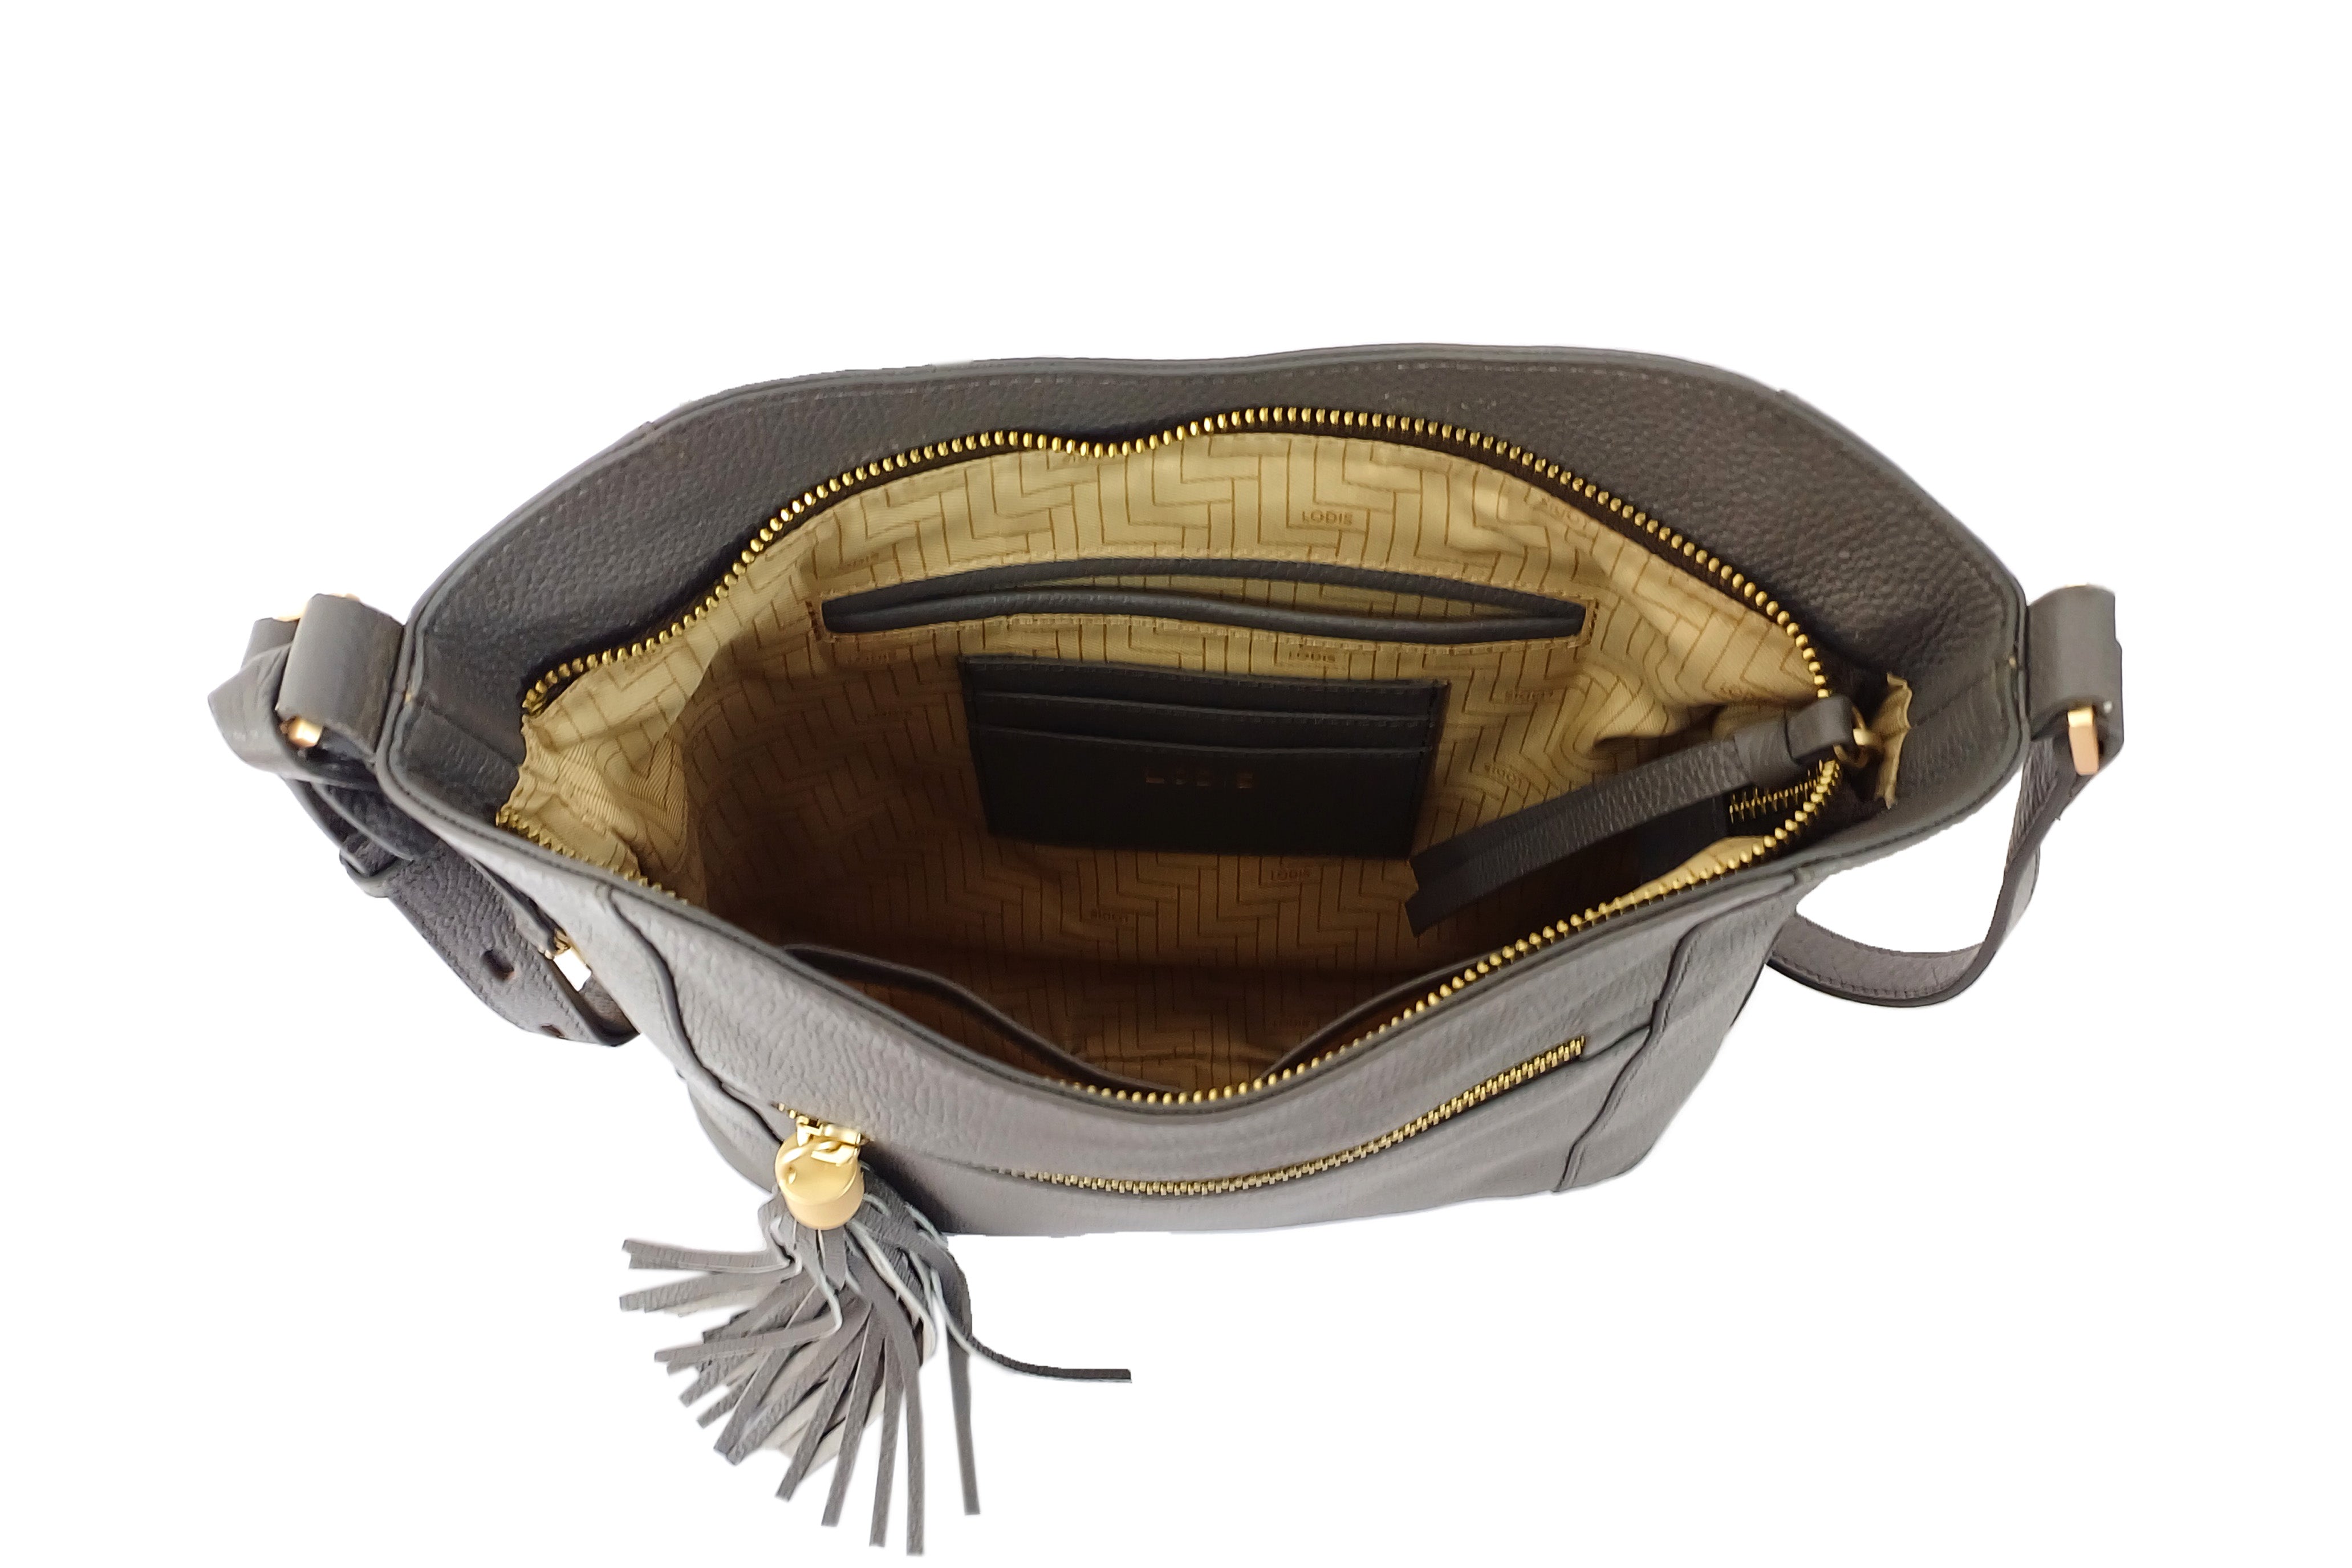 Shop The Stylish Arden Crossbody handbags | Lodis